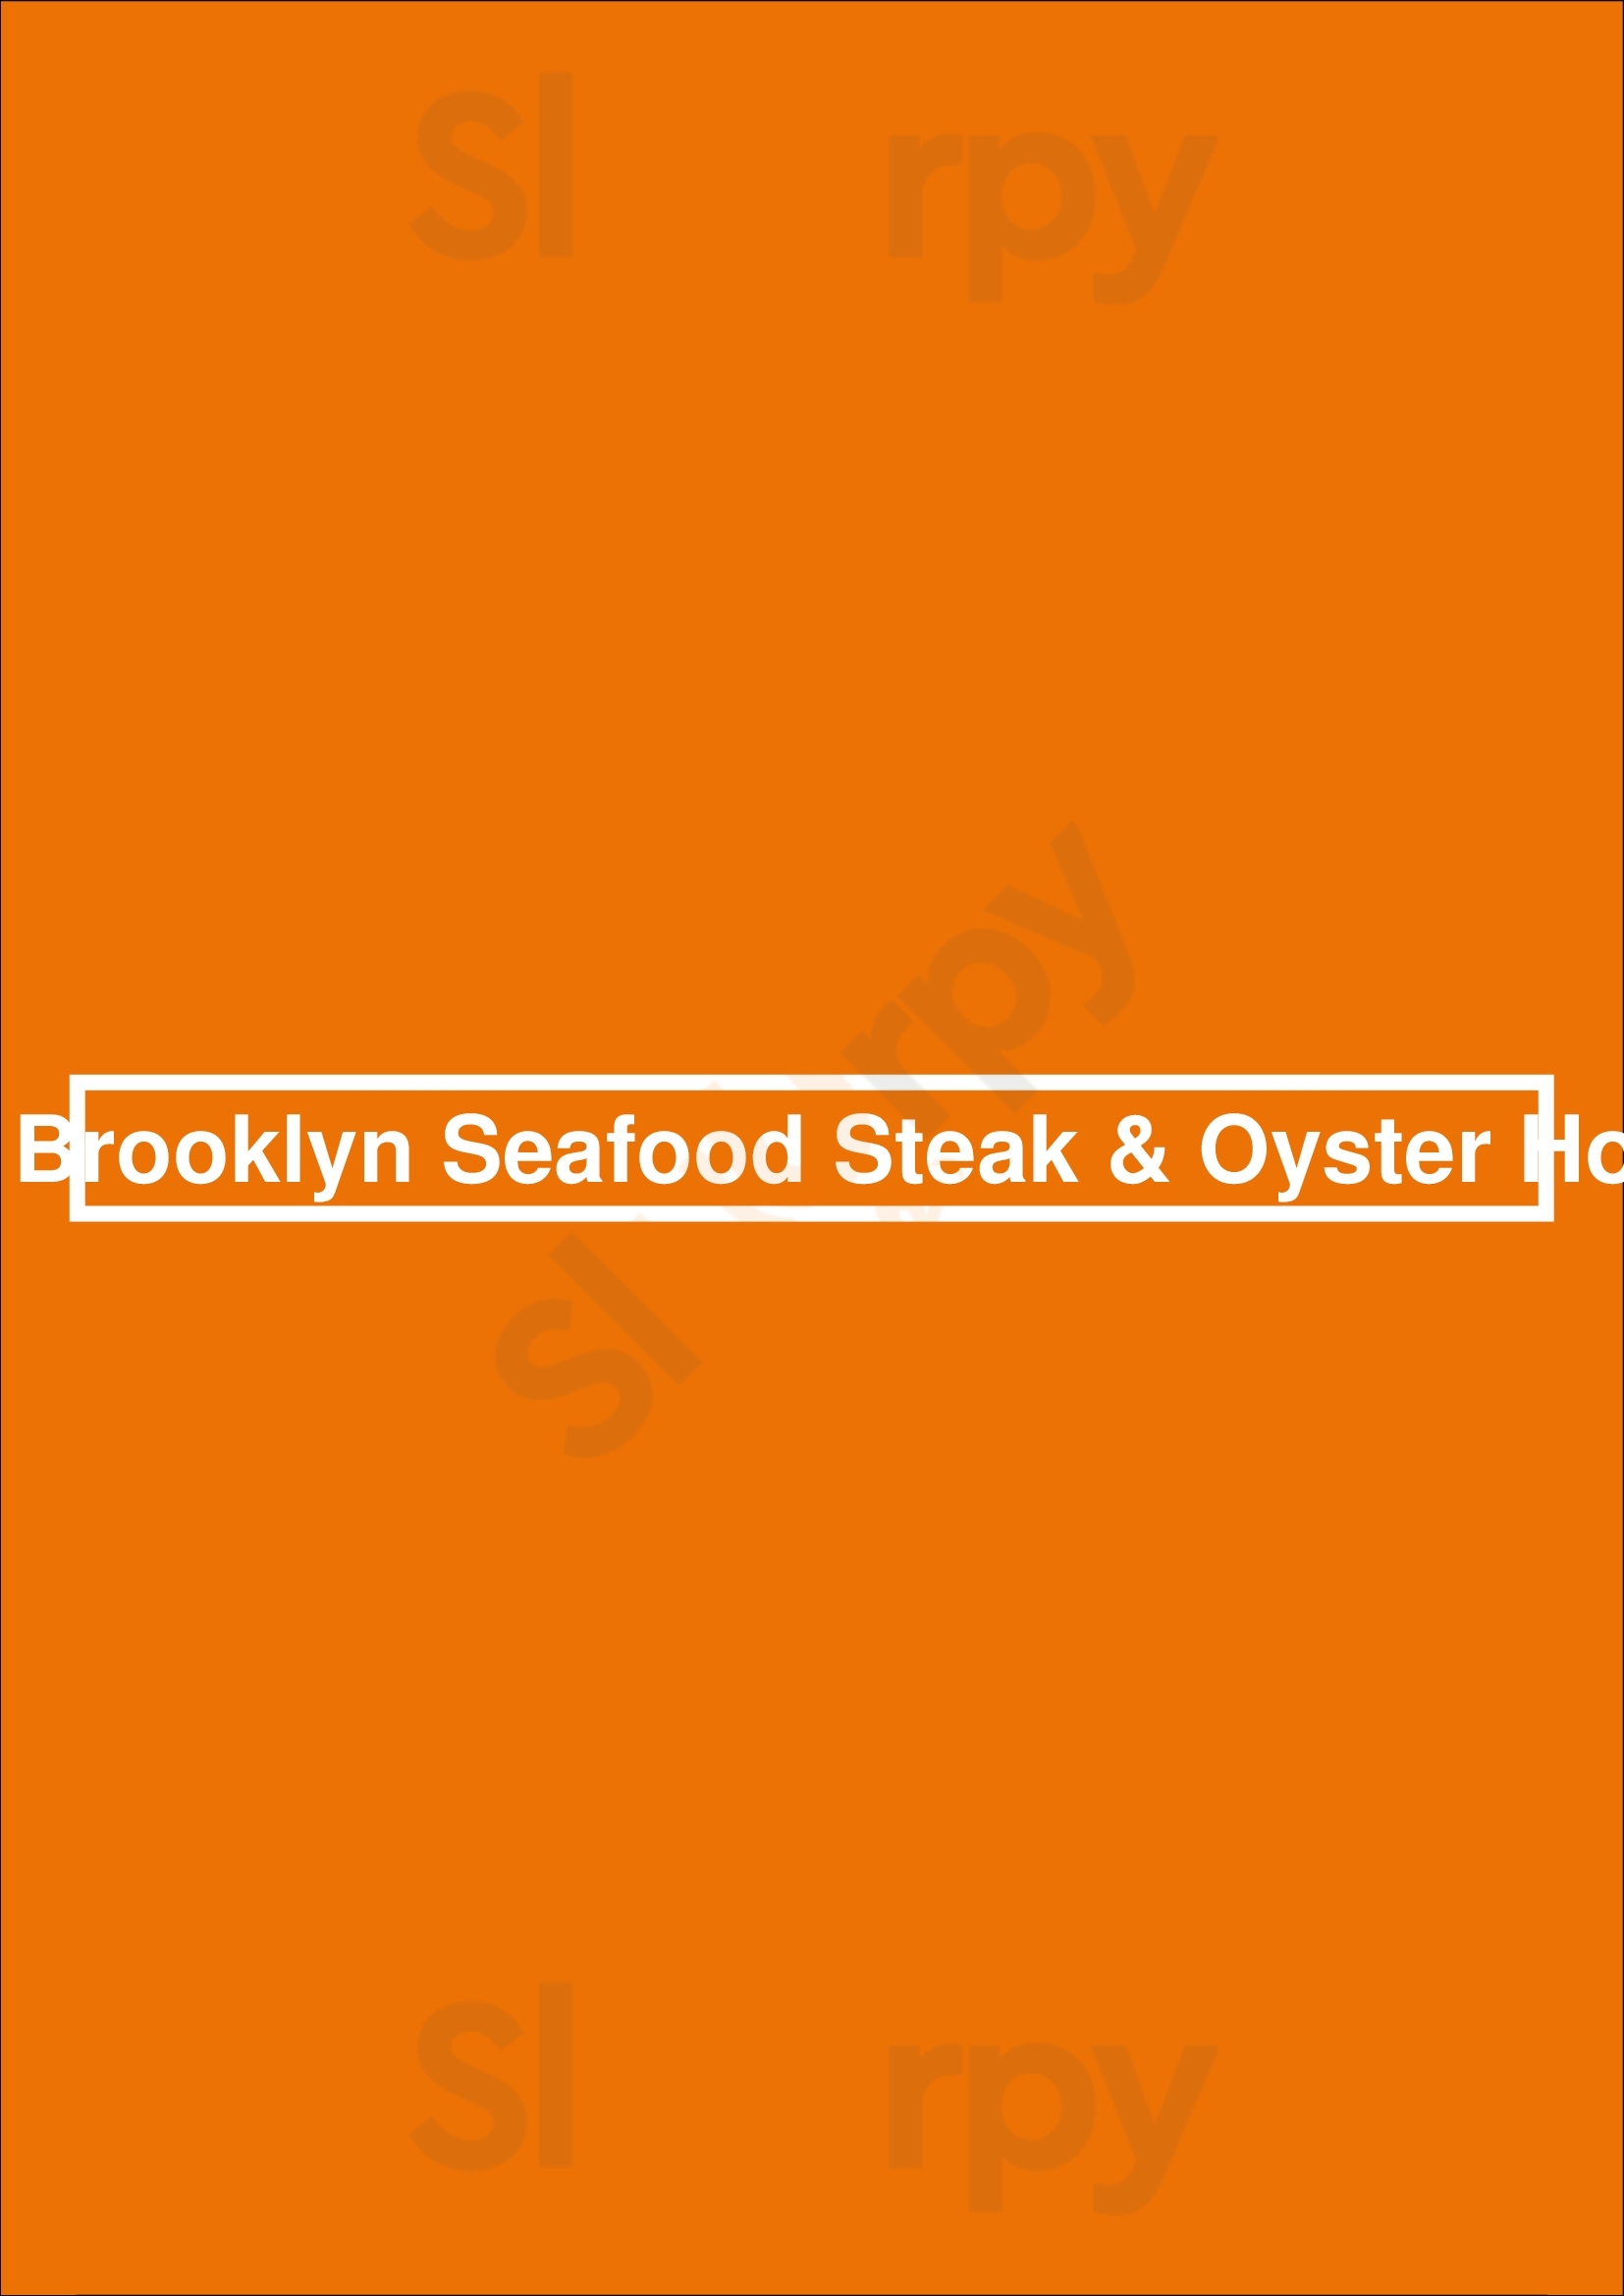 The Brooklyn Seafood Steak & Oyster House Seattle Menu - 1